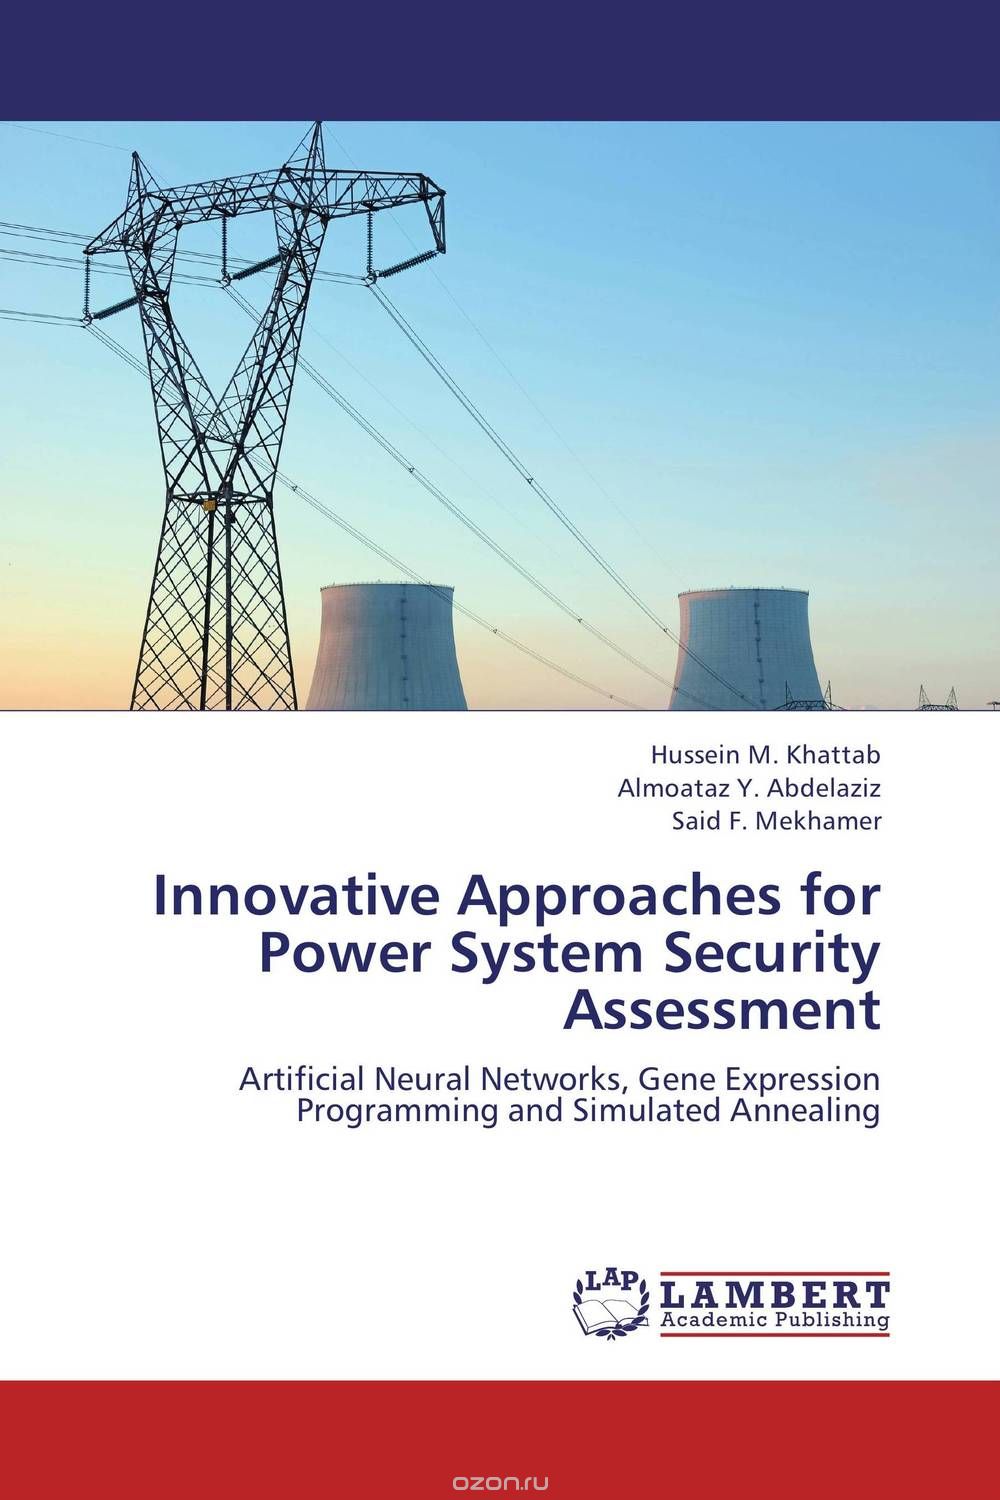 Скачать книгу "Innovative Approaches for Power System Security Assessment"